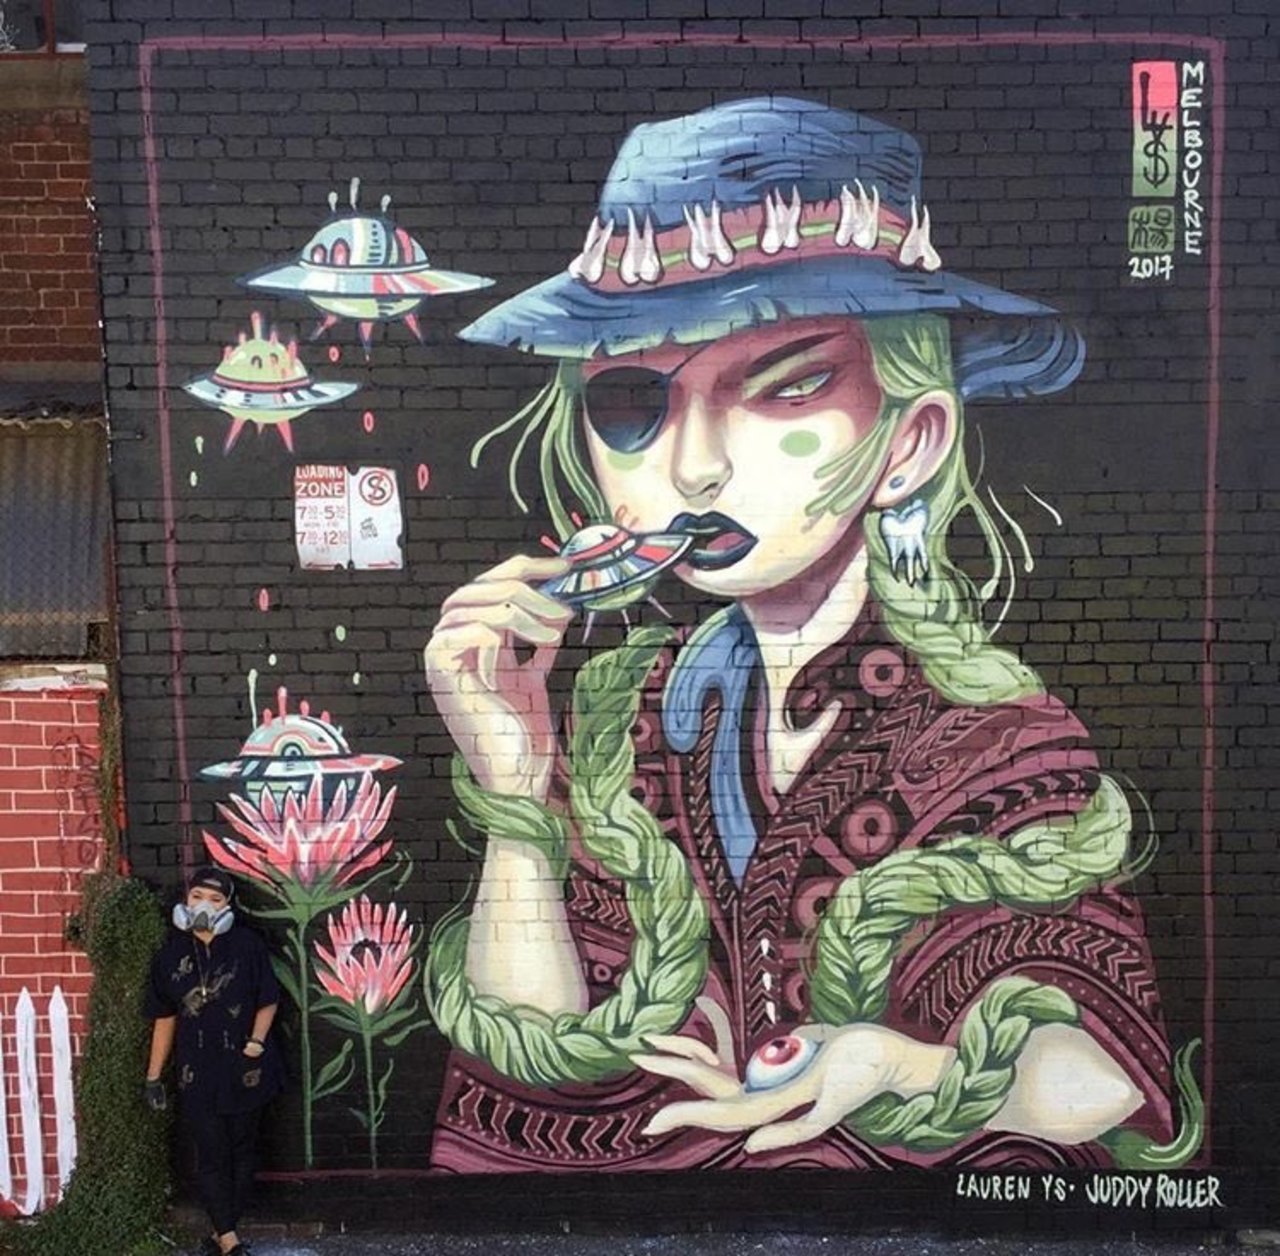 #mural by Lauren YS #Melbourne #Australia #streetart #graffiti #art https://t.co/9yvwUyzWvn